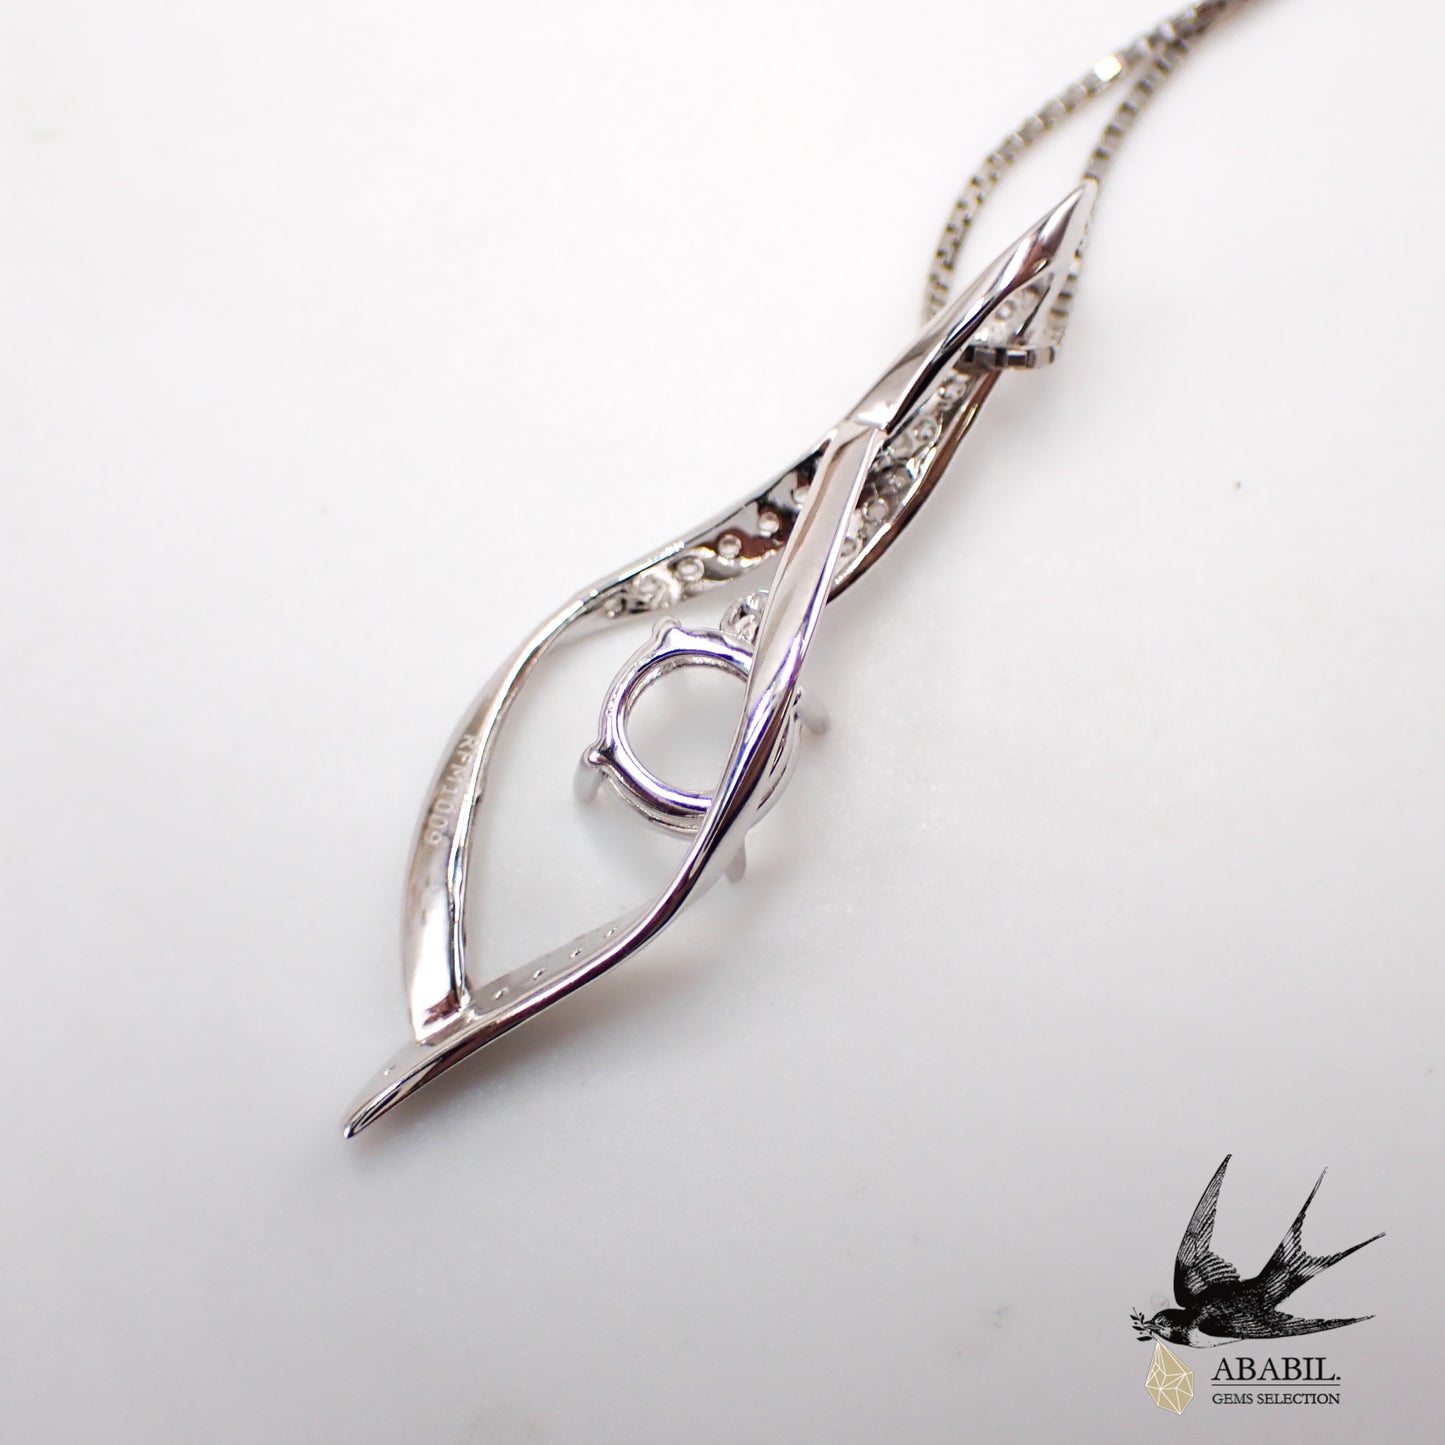 [Empty frame for custom-made jewelry pendant top] PTWK08